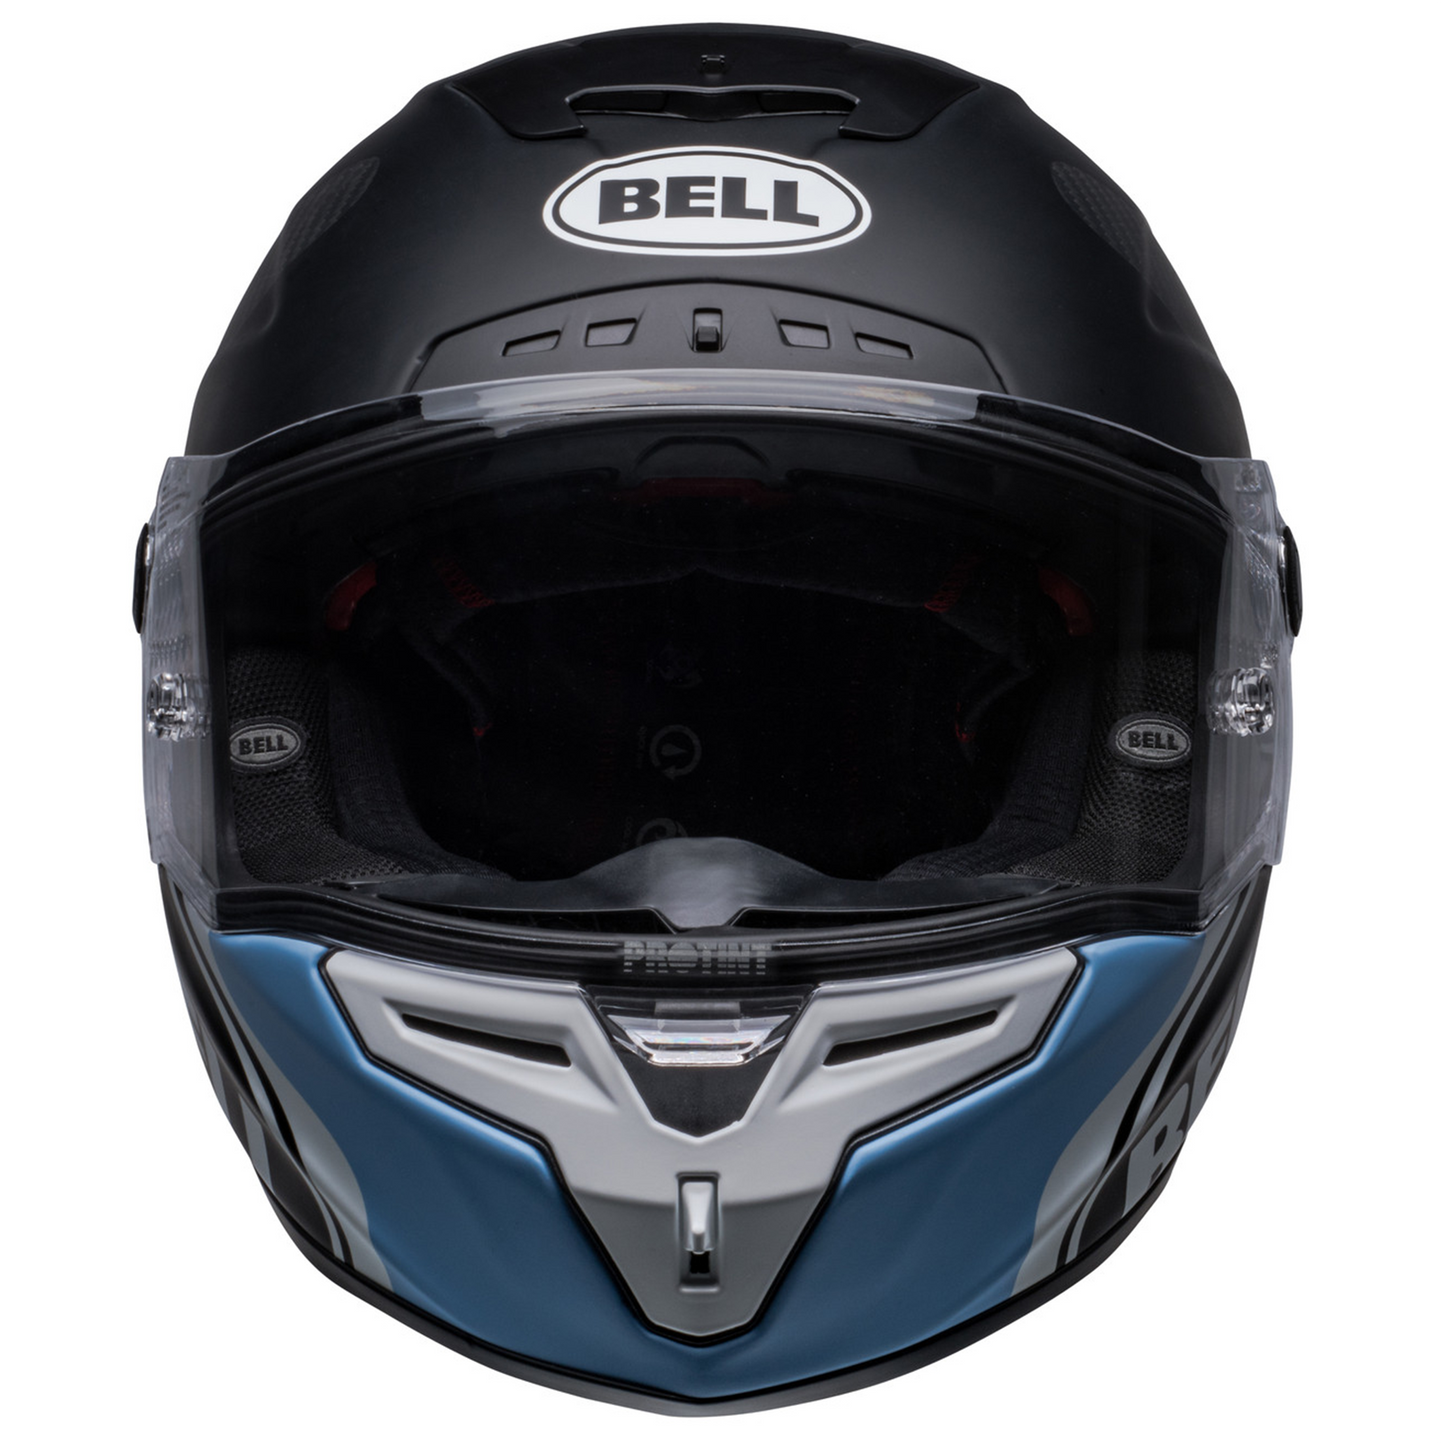 Bell Race Star Flex DLX - Hello Cousteau Algae Matt Black/Blue - Protint Visor